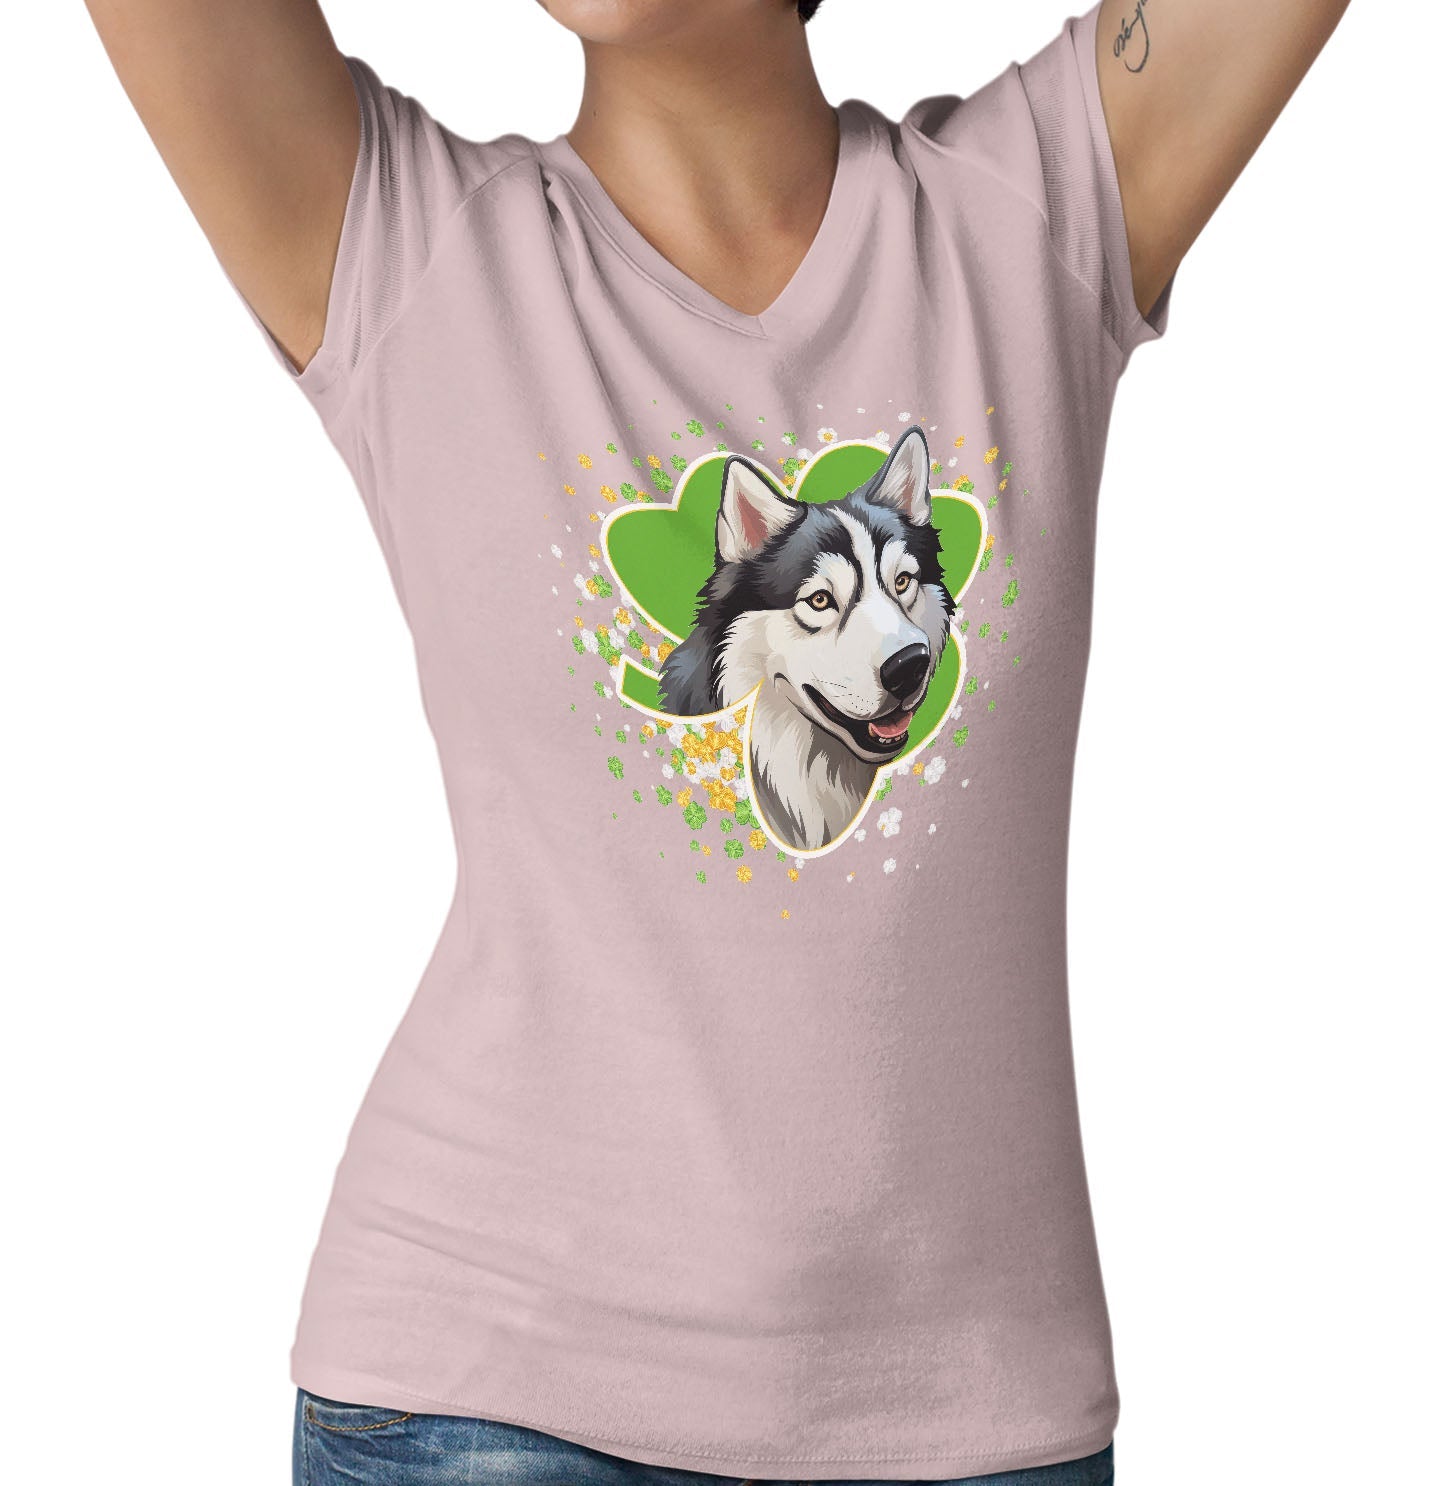 Big Clover St. Patrick's Day Siberian Husky - Women's V-Neck T-Shirt